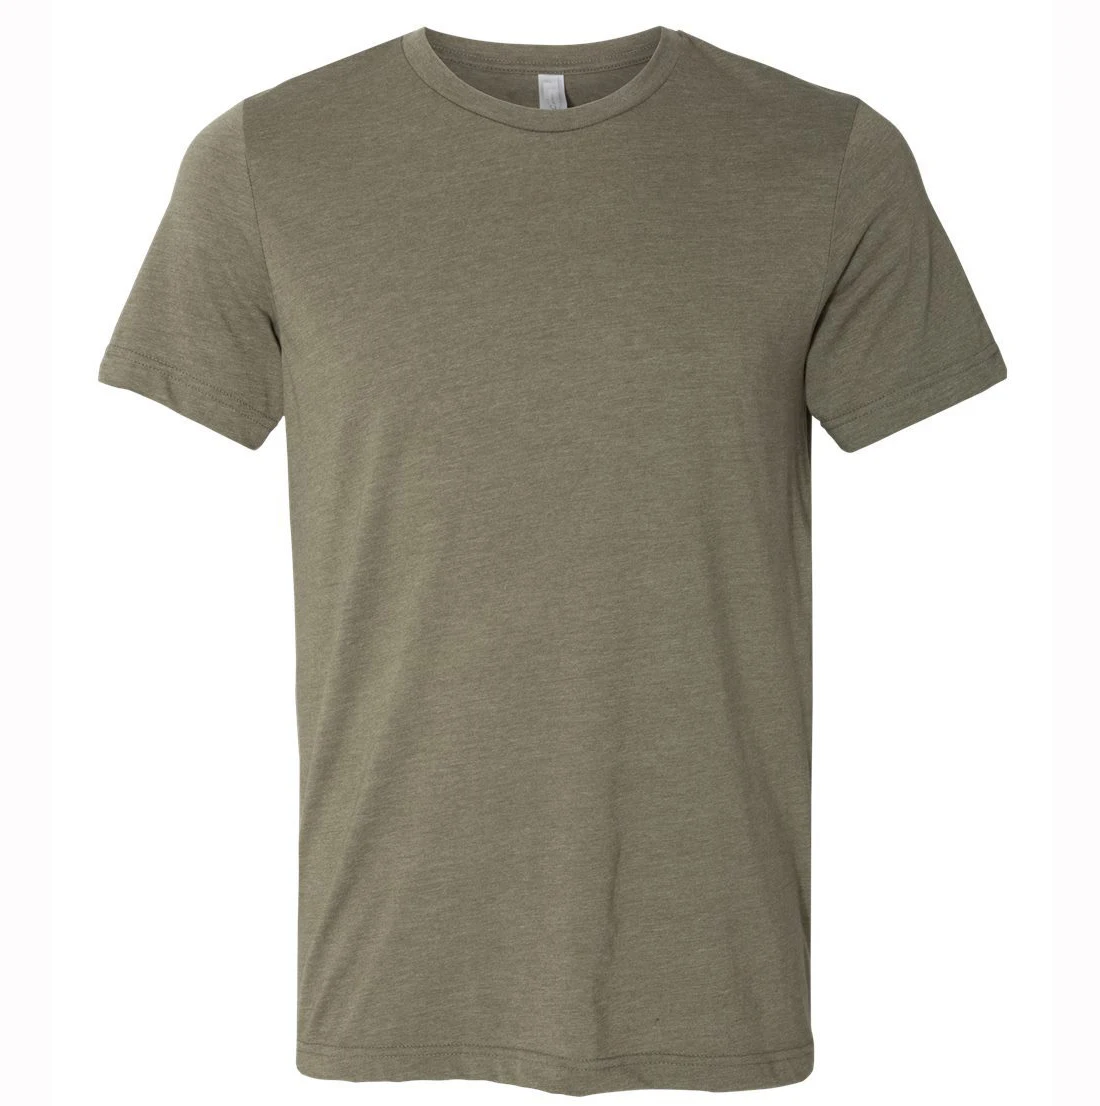 Male Fashion Short Sleeve Tri Blend T Shirts - Buy Tri Blend T Shirts,T ...